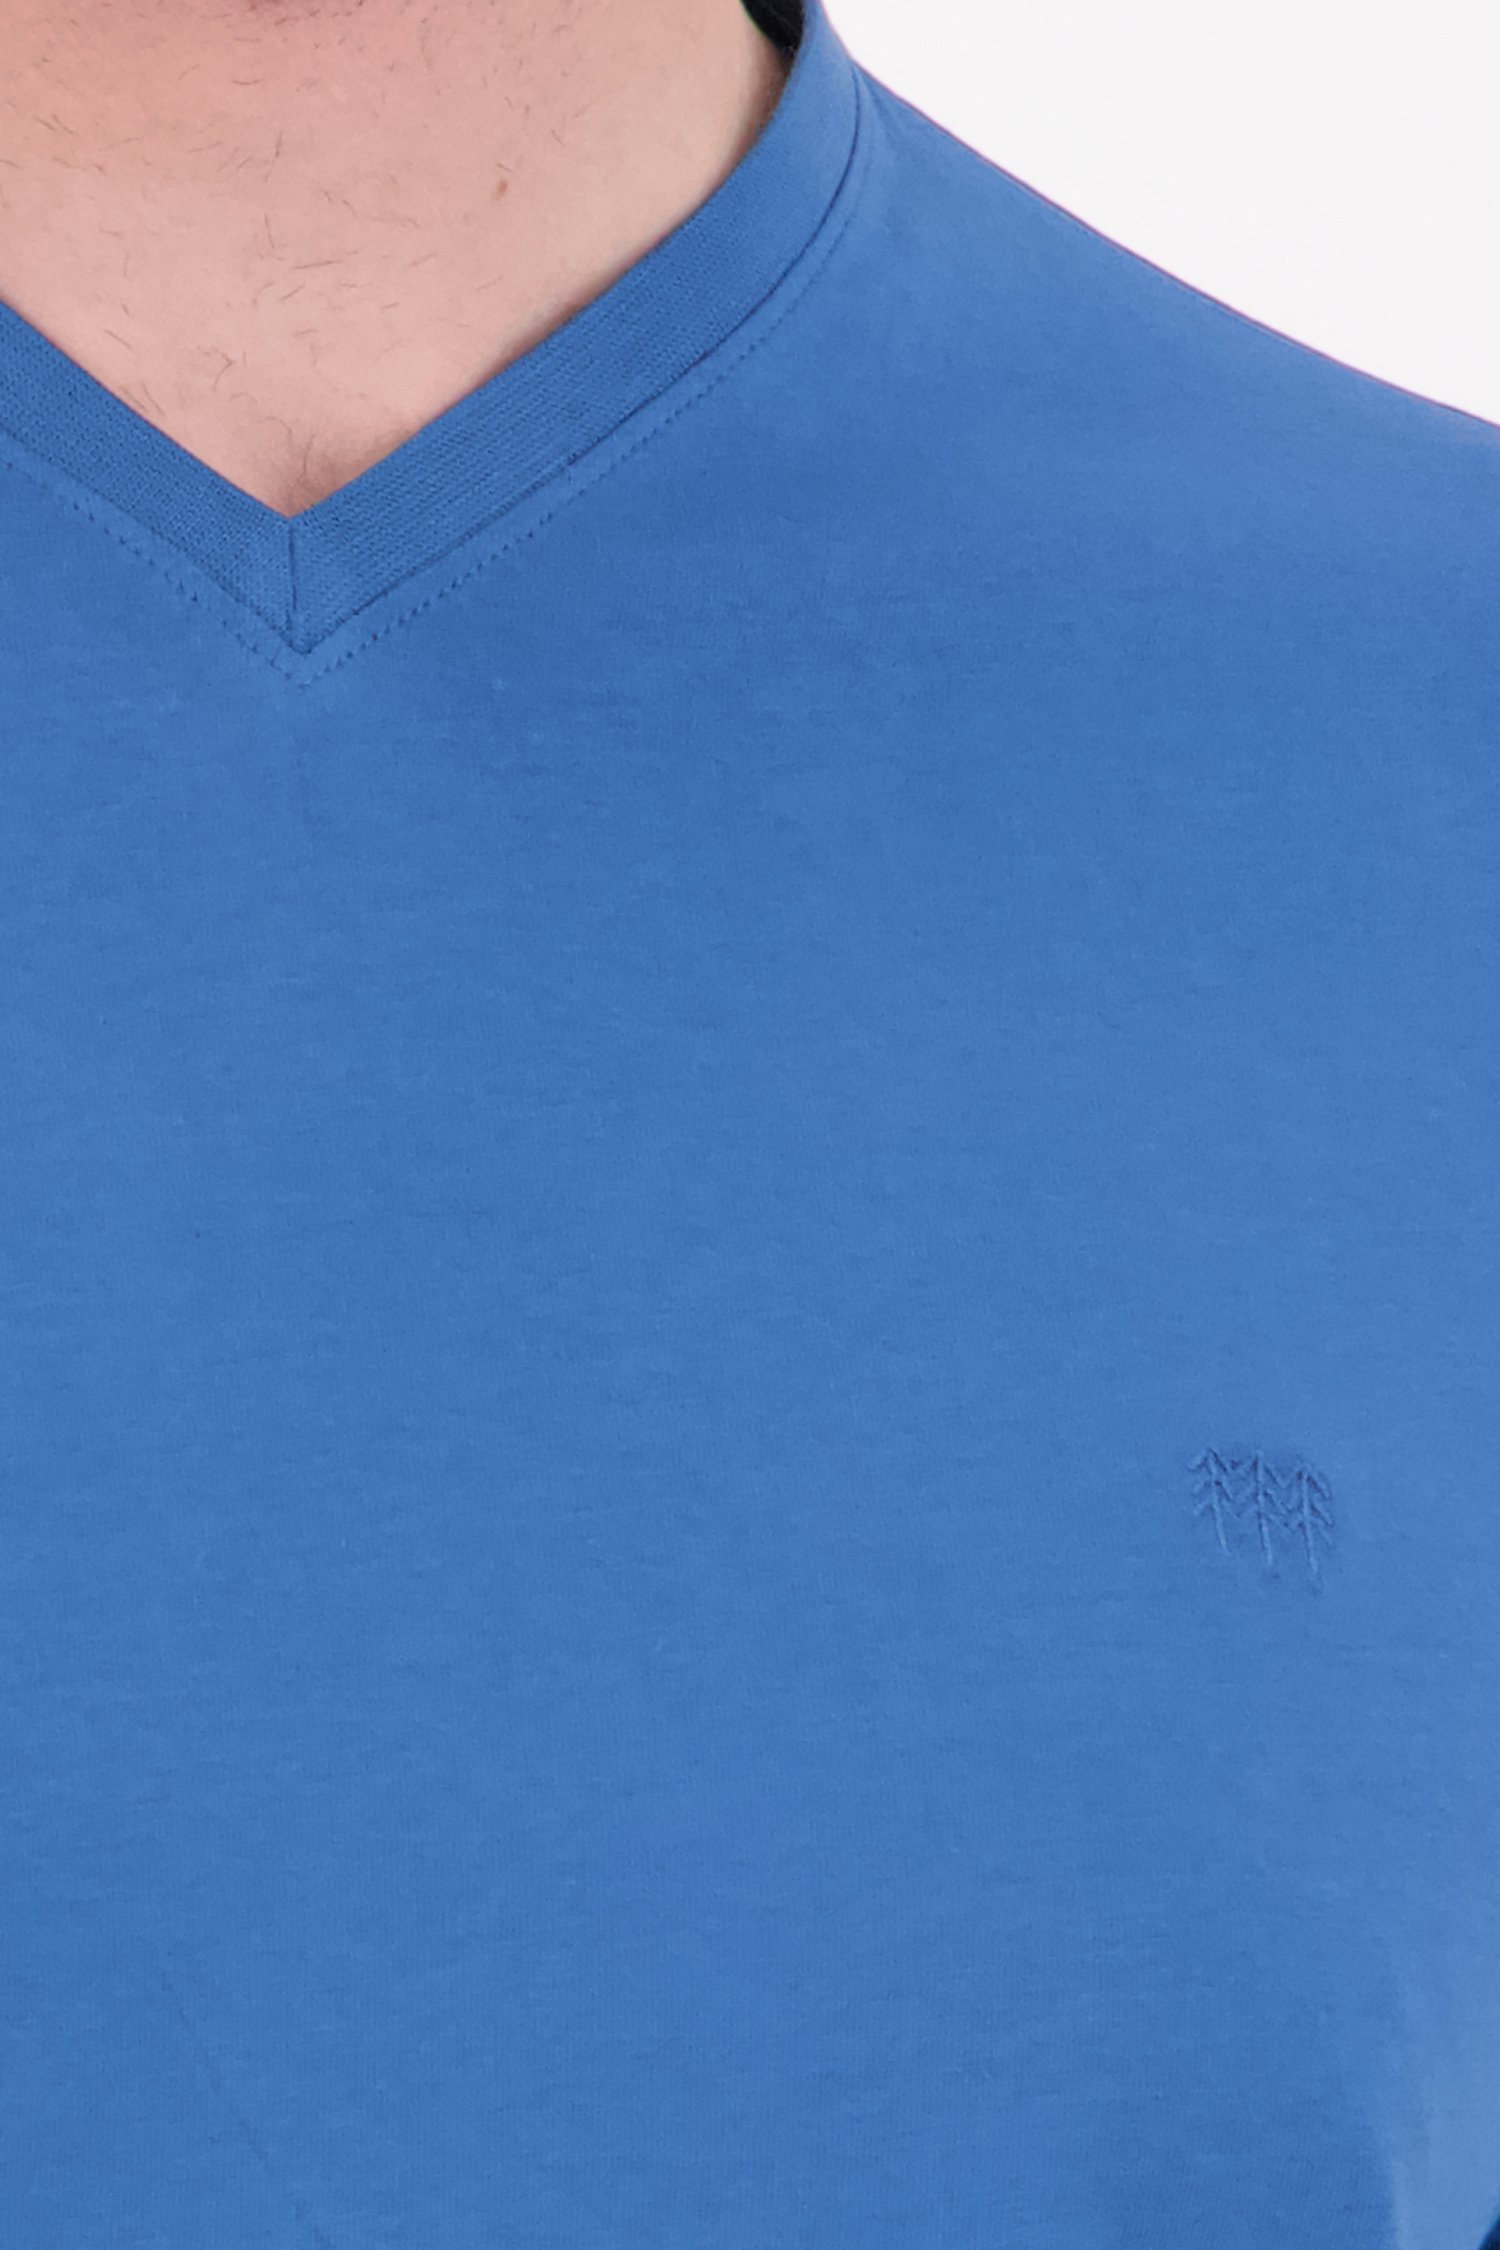 T-shirt col V bleu de Ravøtt pour Hommes